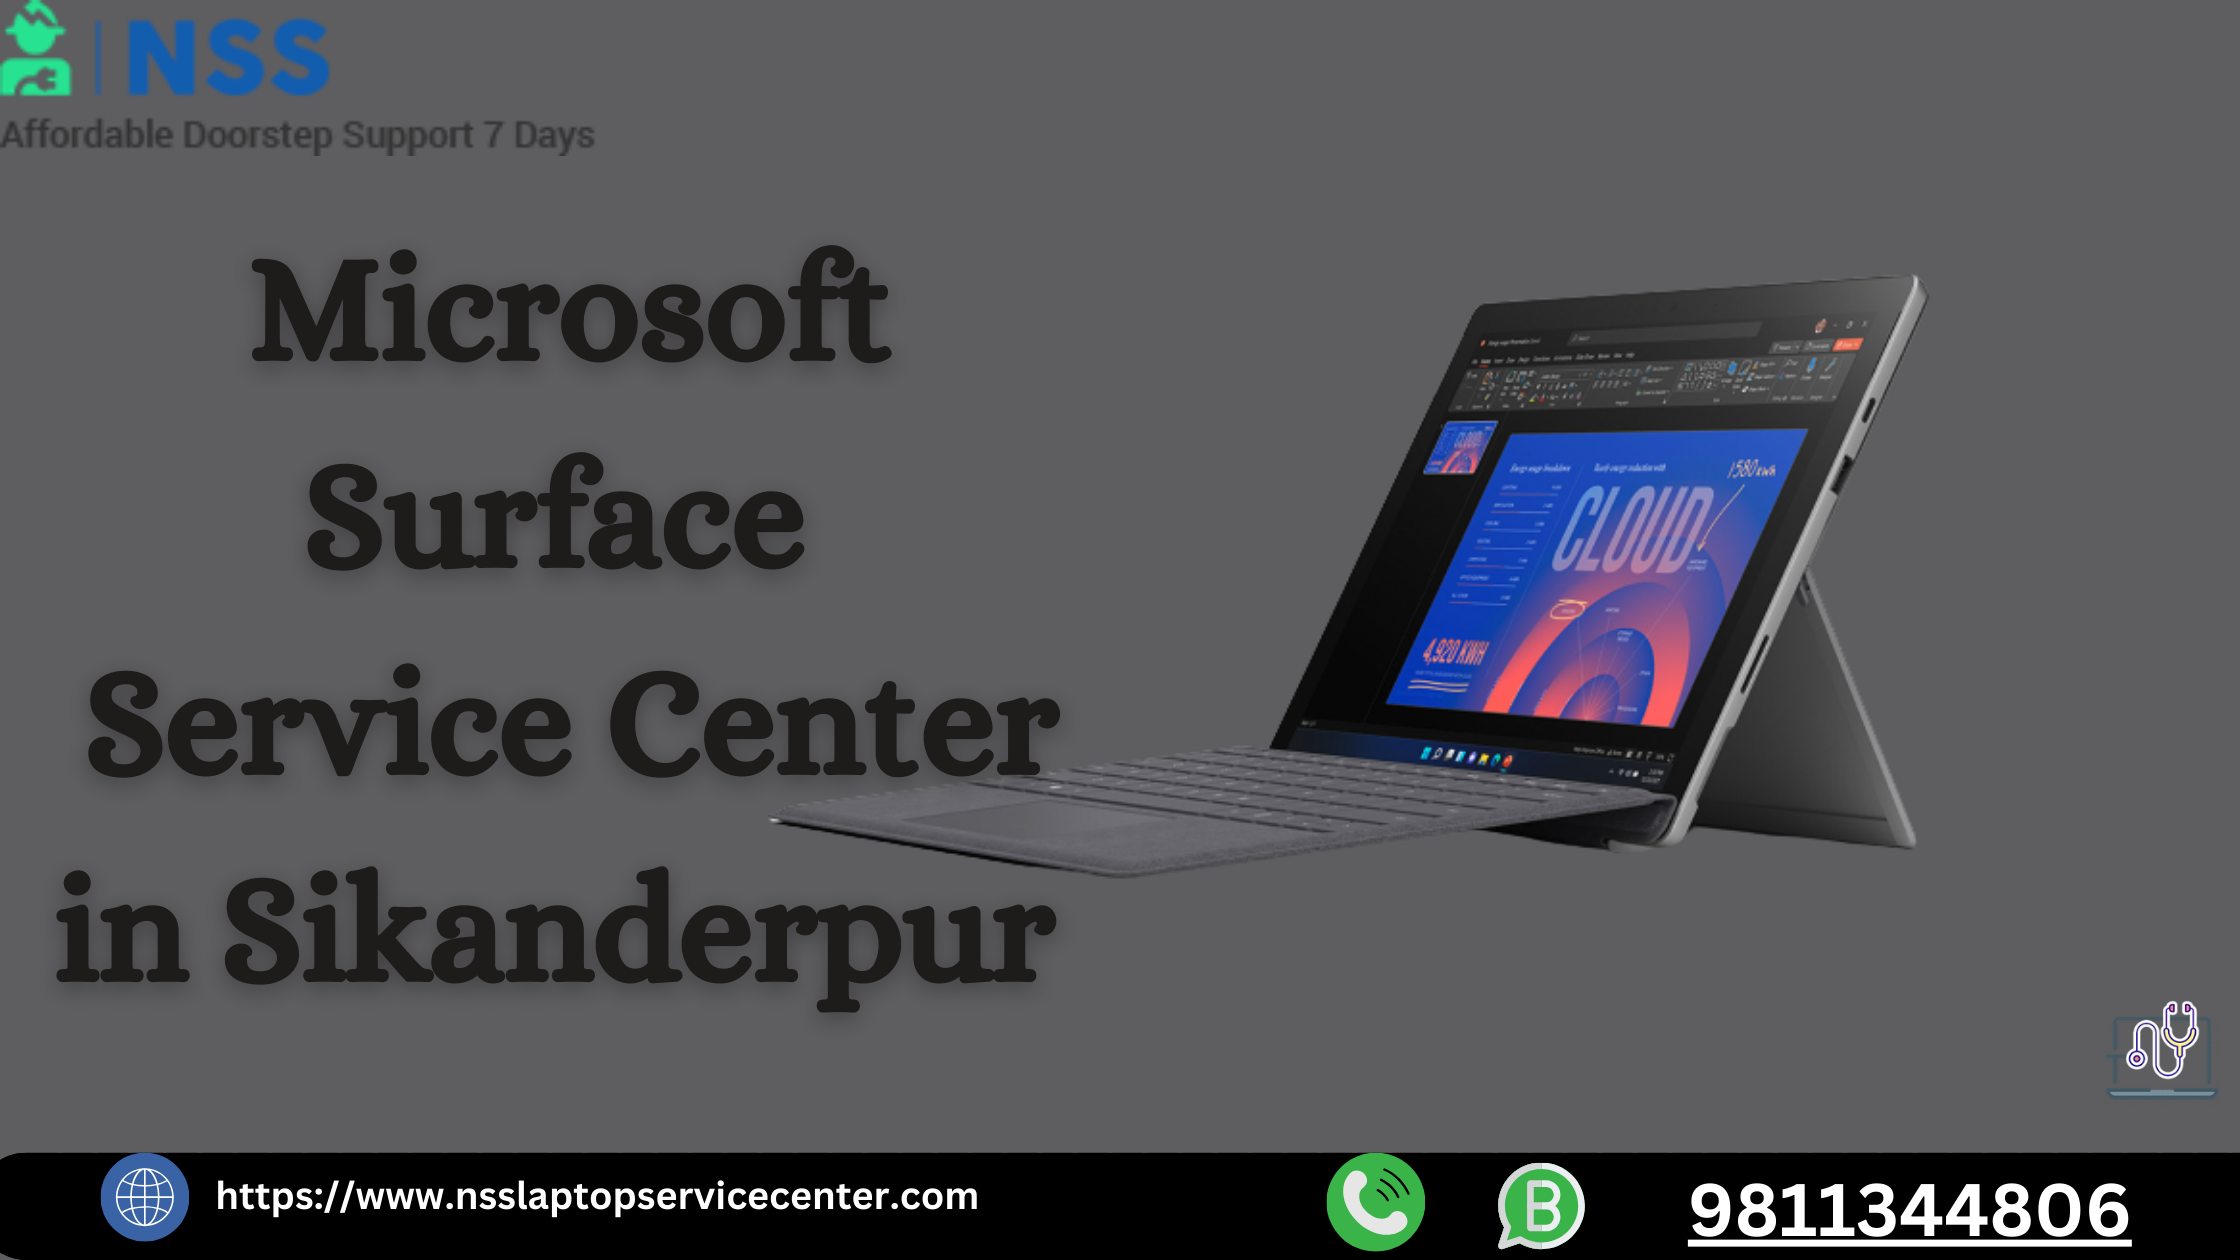 Microsoft Service Center in Sikanderpur Near Gurugram